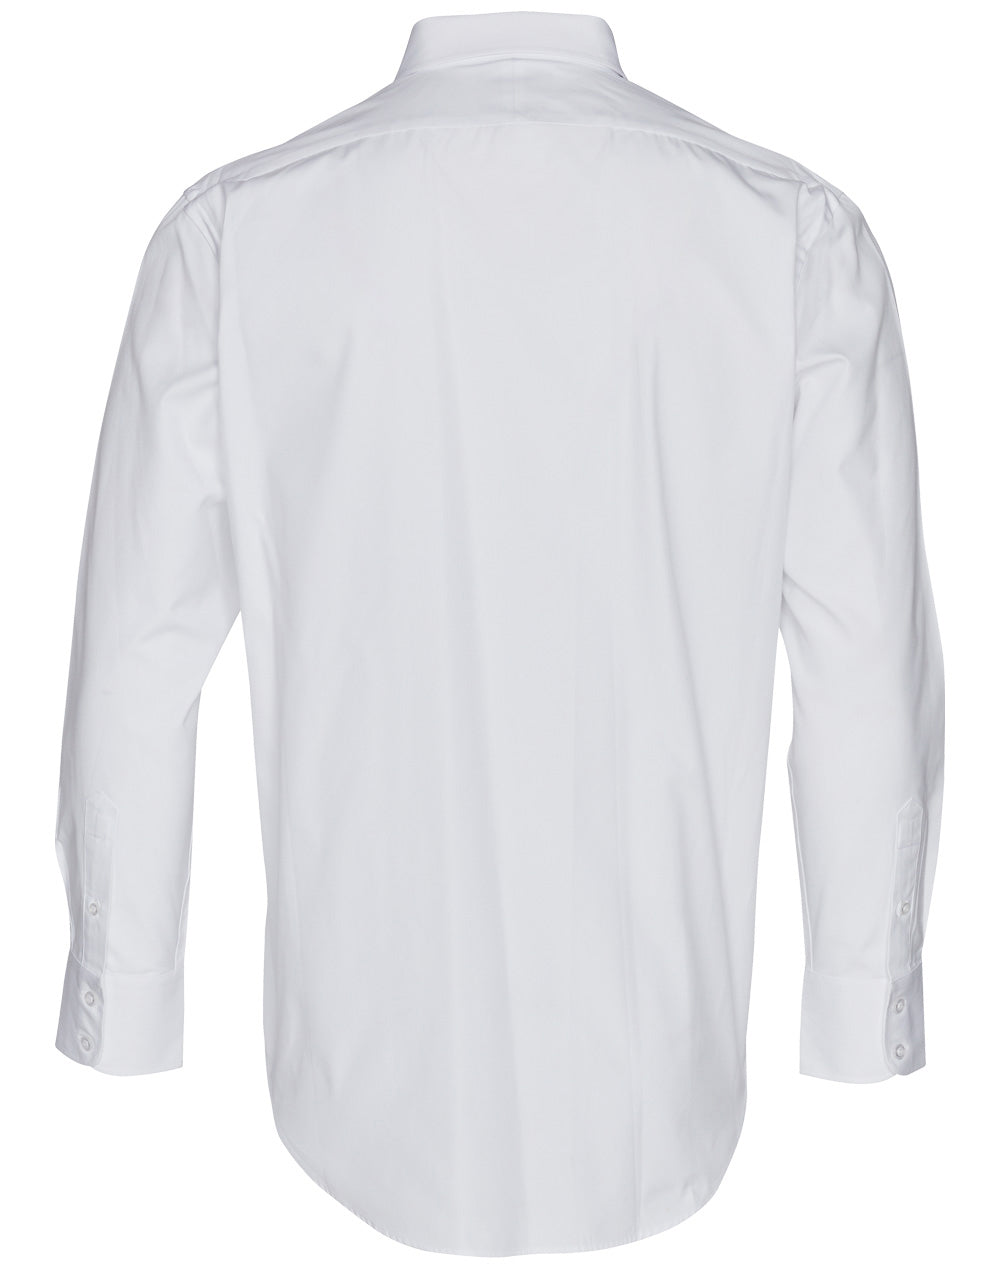 Winning Spirit-Men's CVC Oxford Long Sleeve Shirt -M7040L